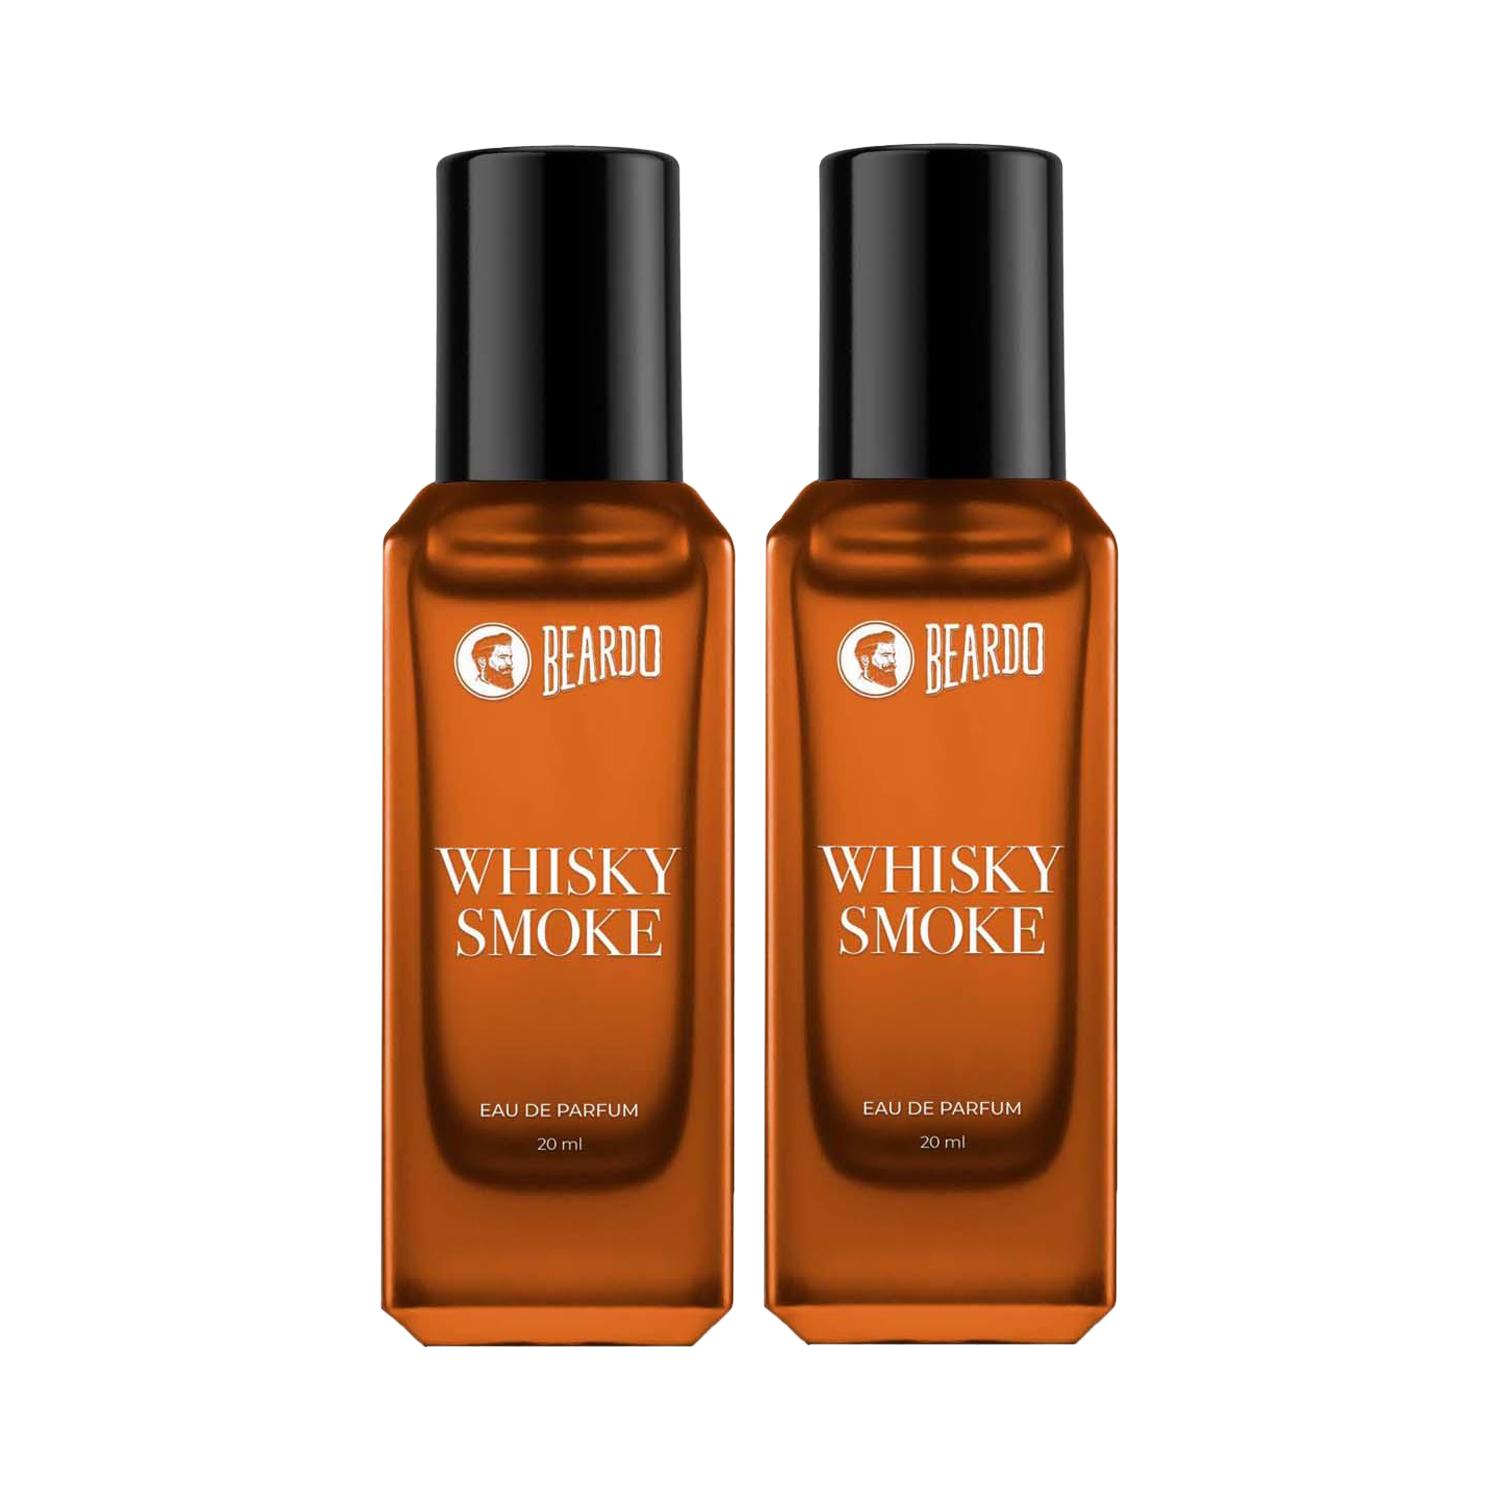 Beardo | Beardo Whisky Smoke Perfume for Men, Spicy, Woody - Oudh (20 ml) Combo